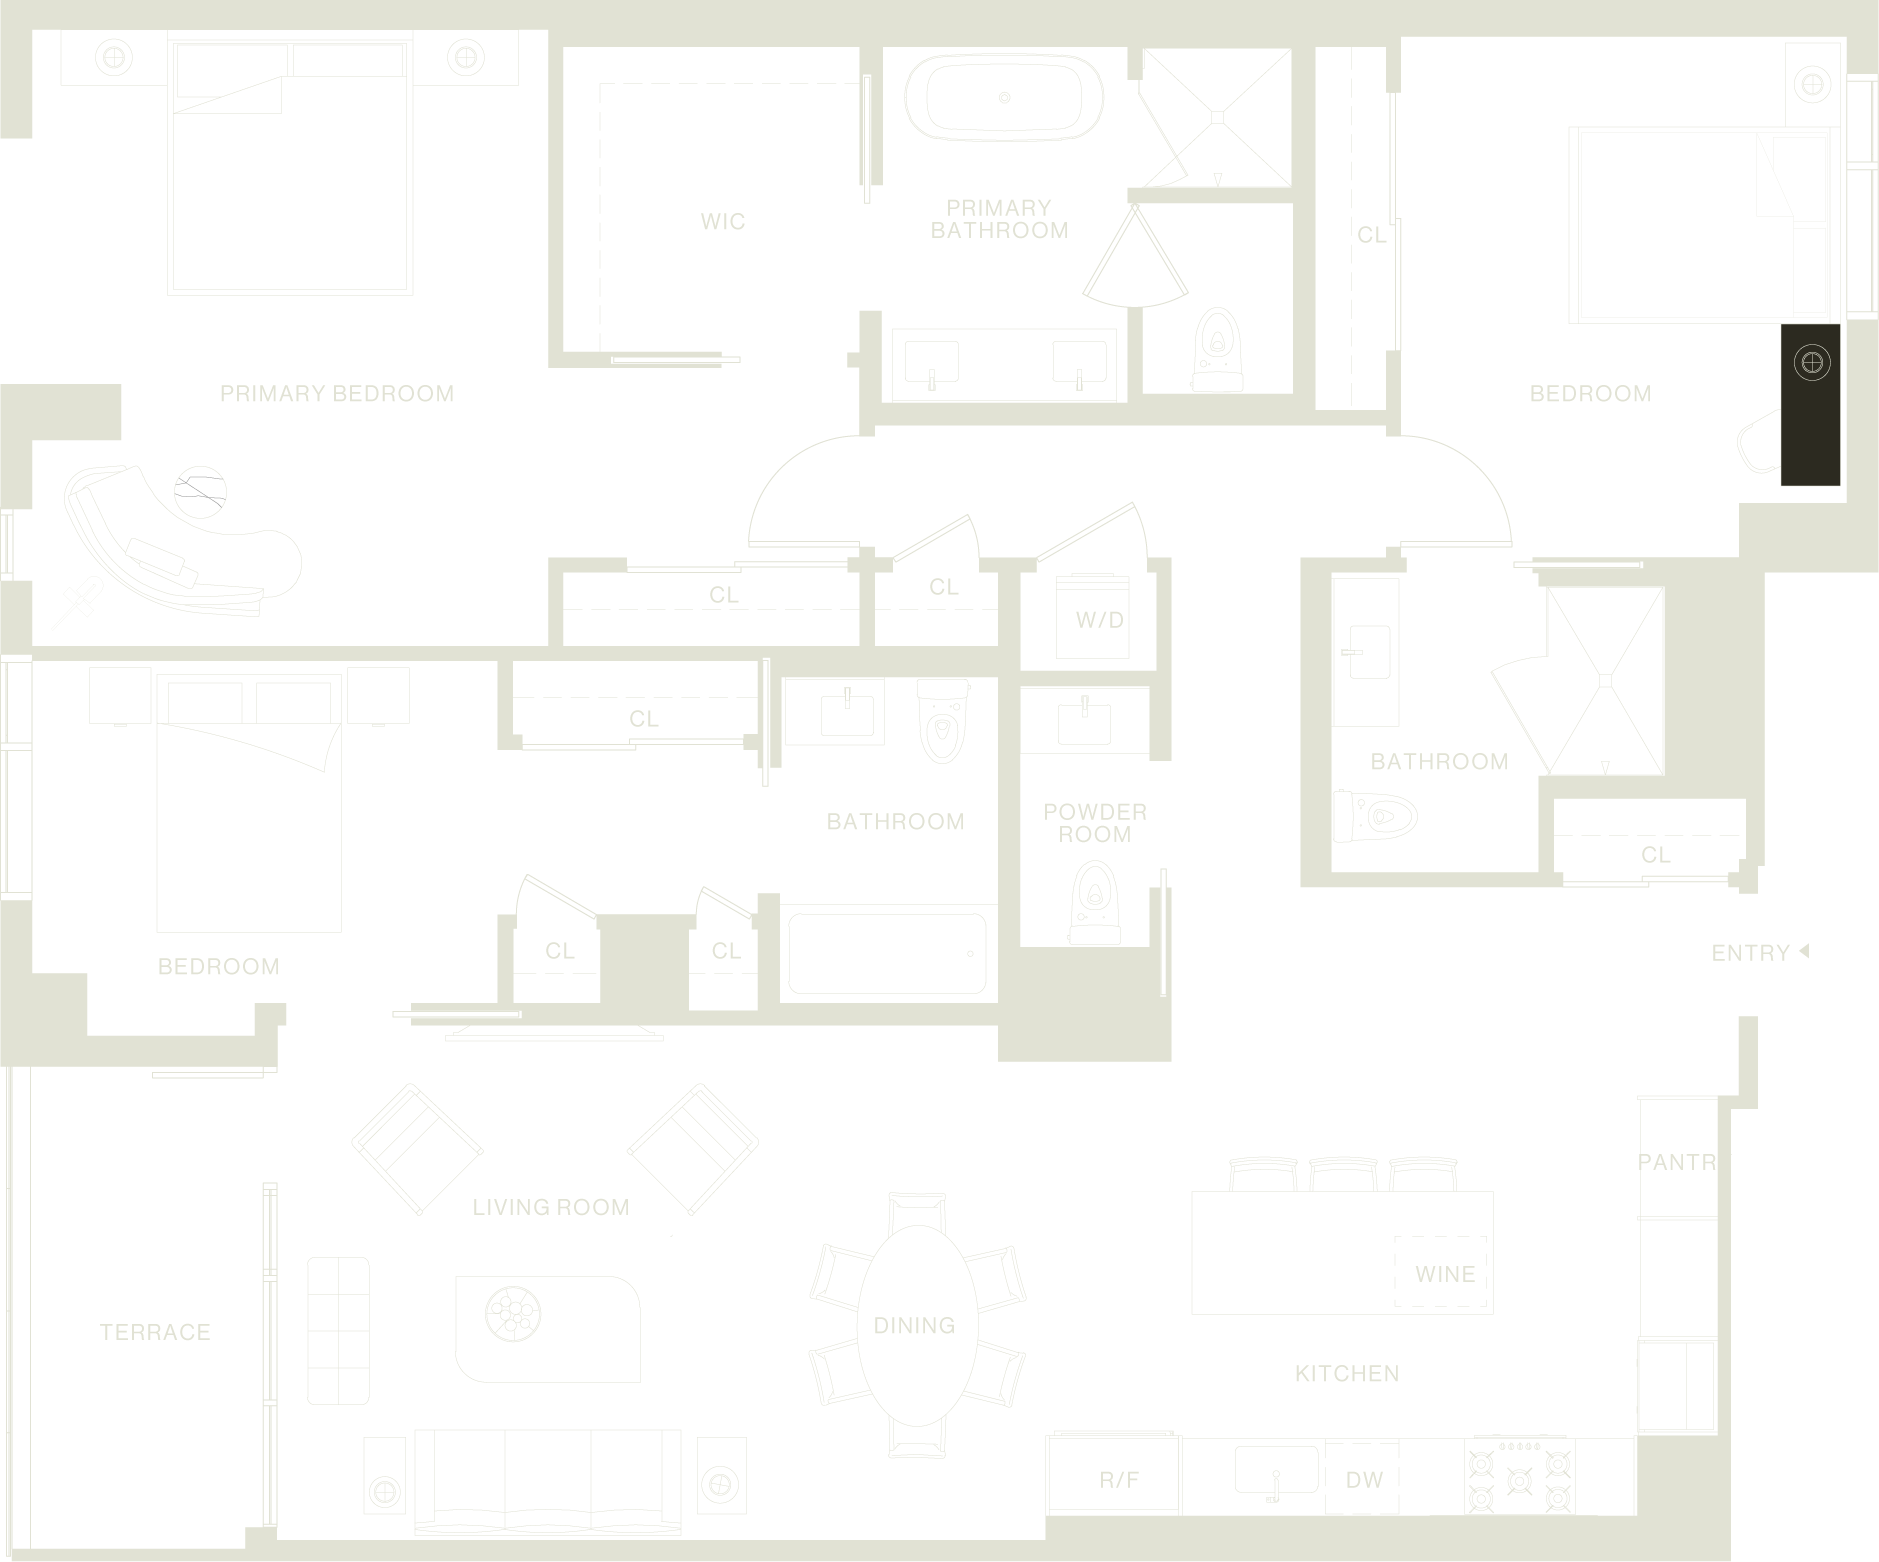 Floor plan for unit 501